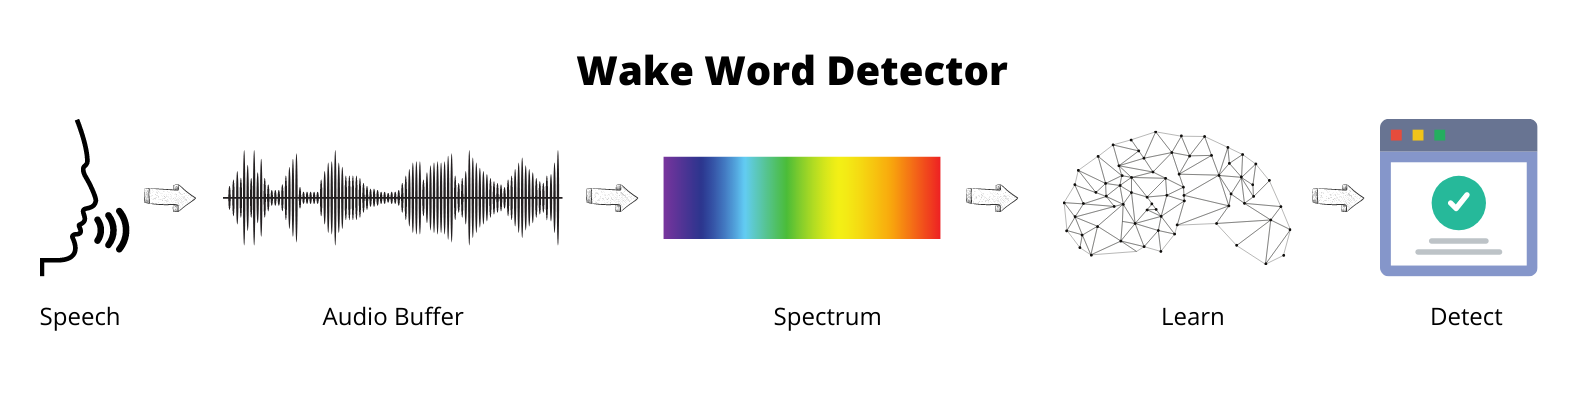 wake_word_detect.png